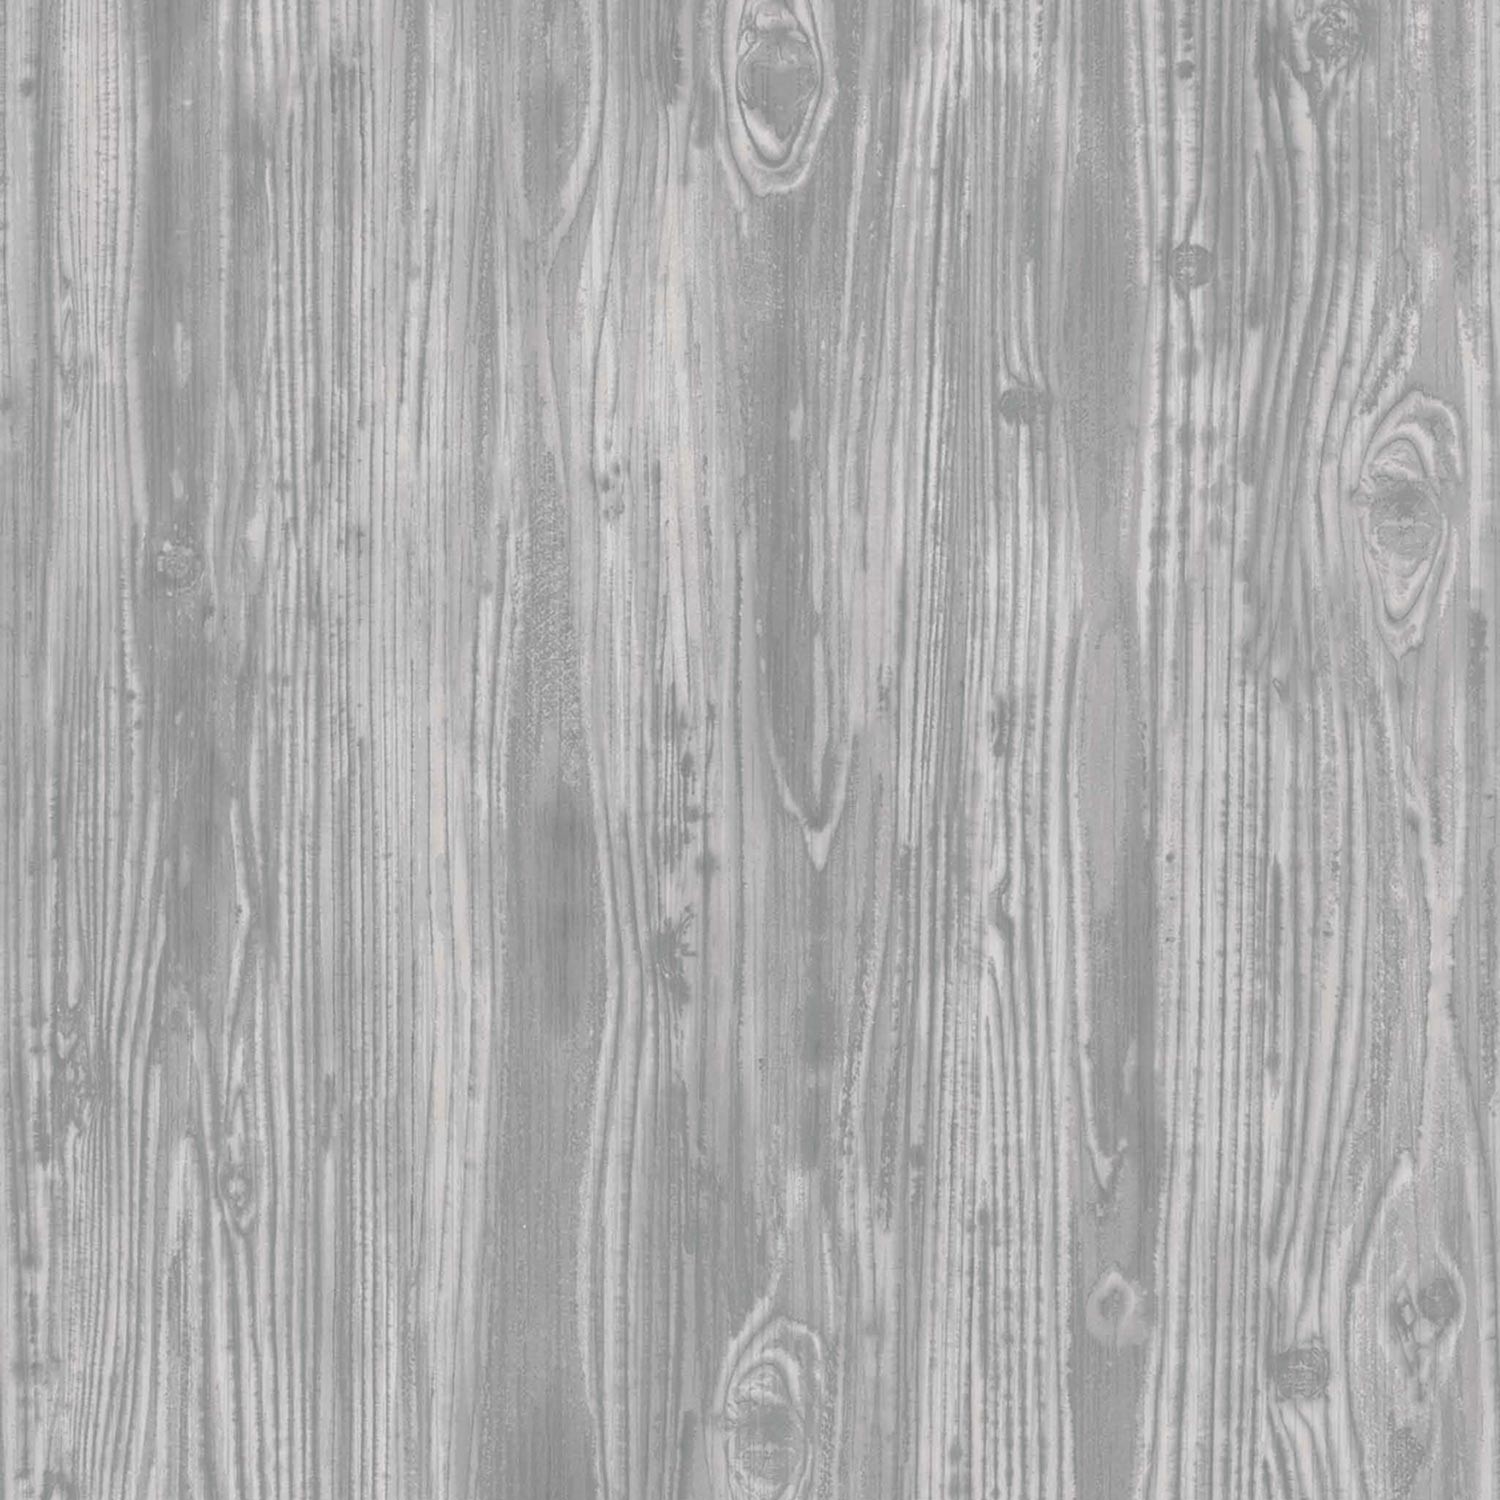 Temporary Wallpaper Woodgrain Pewter